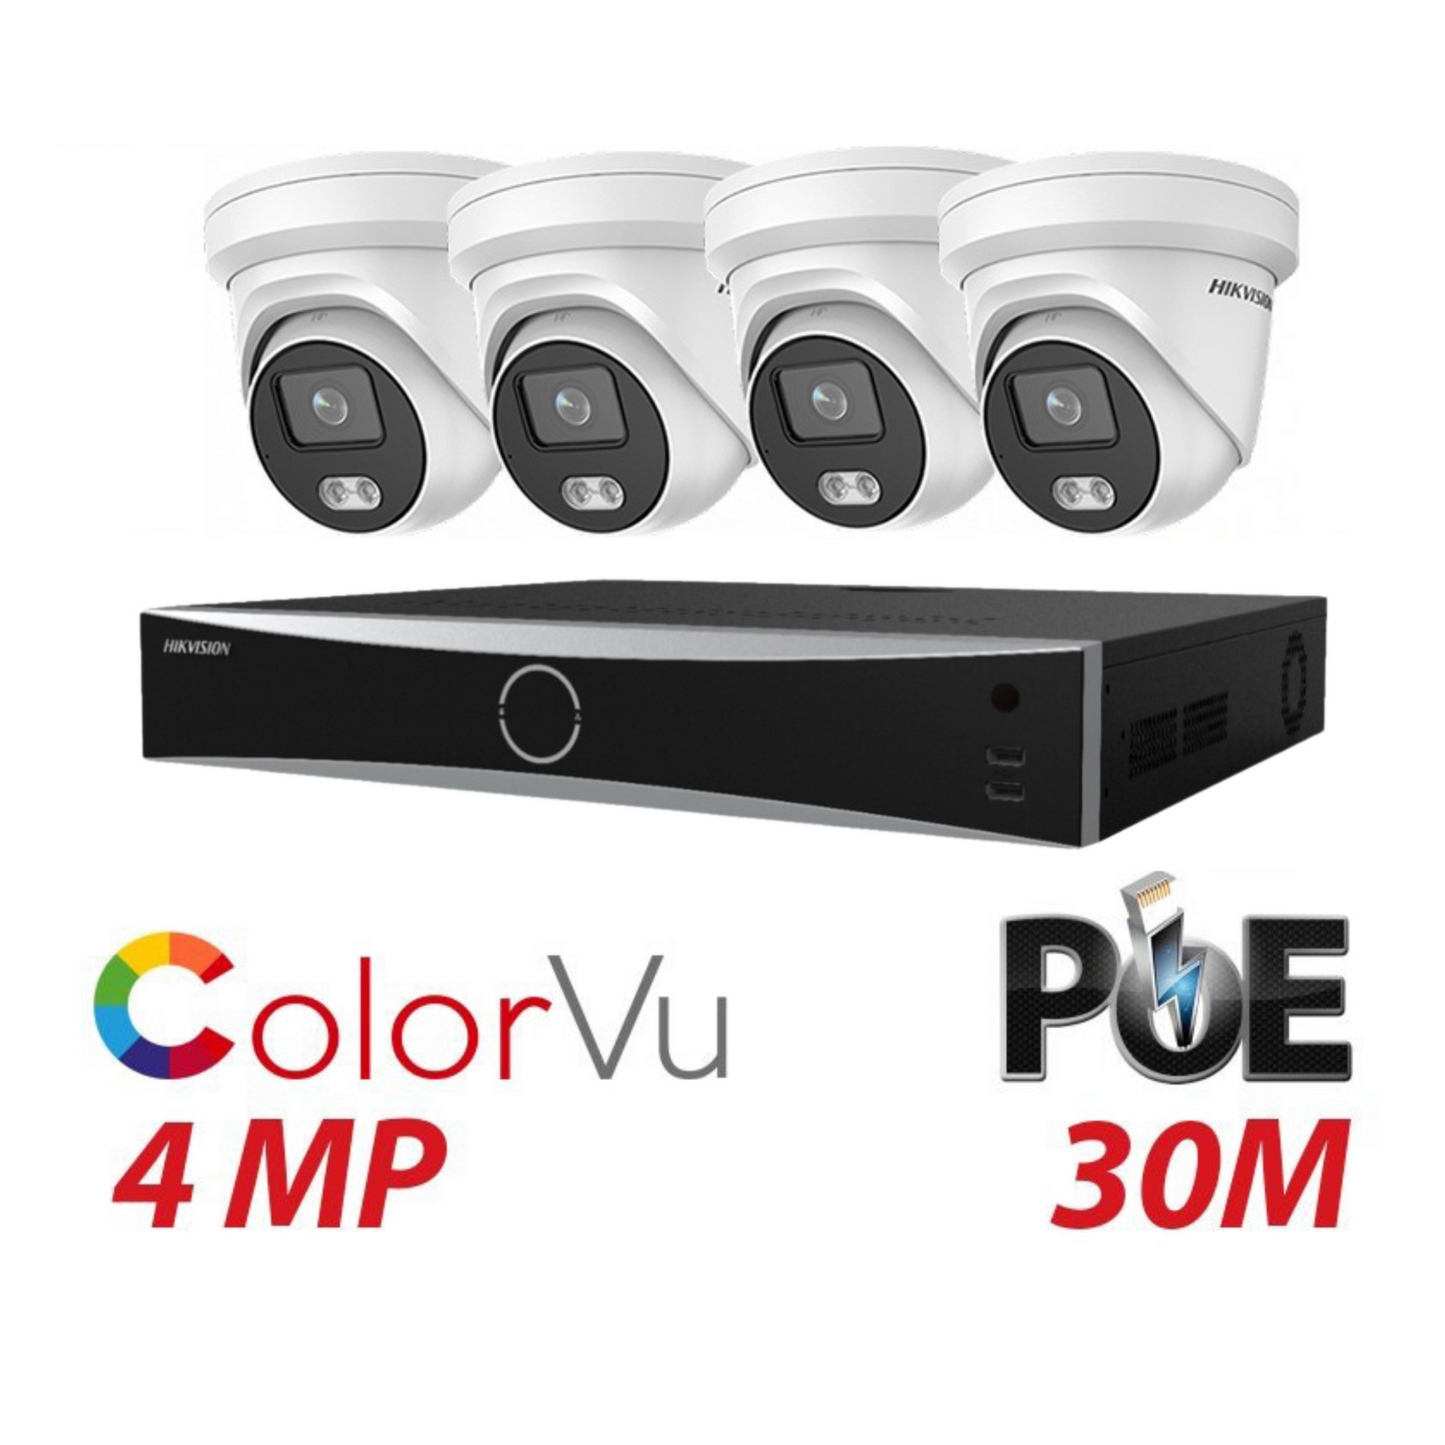 Hikvision CCTV kit, 4 x 4mp Smart Hybrid Colorvu IP Poe cameras with Audio, 1 x 4 Channel NVR